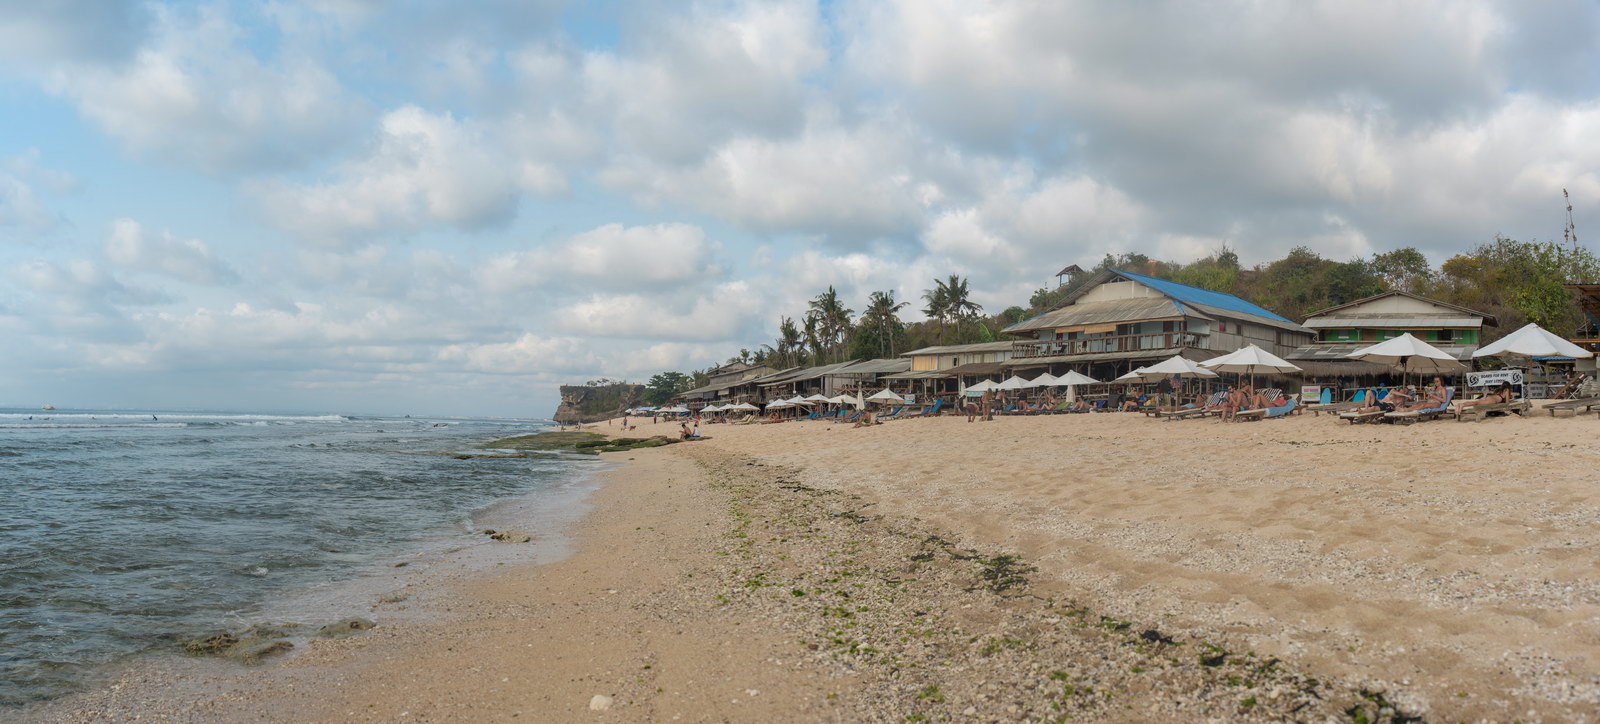 Voyage à Bali - Balangan Beach